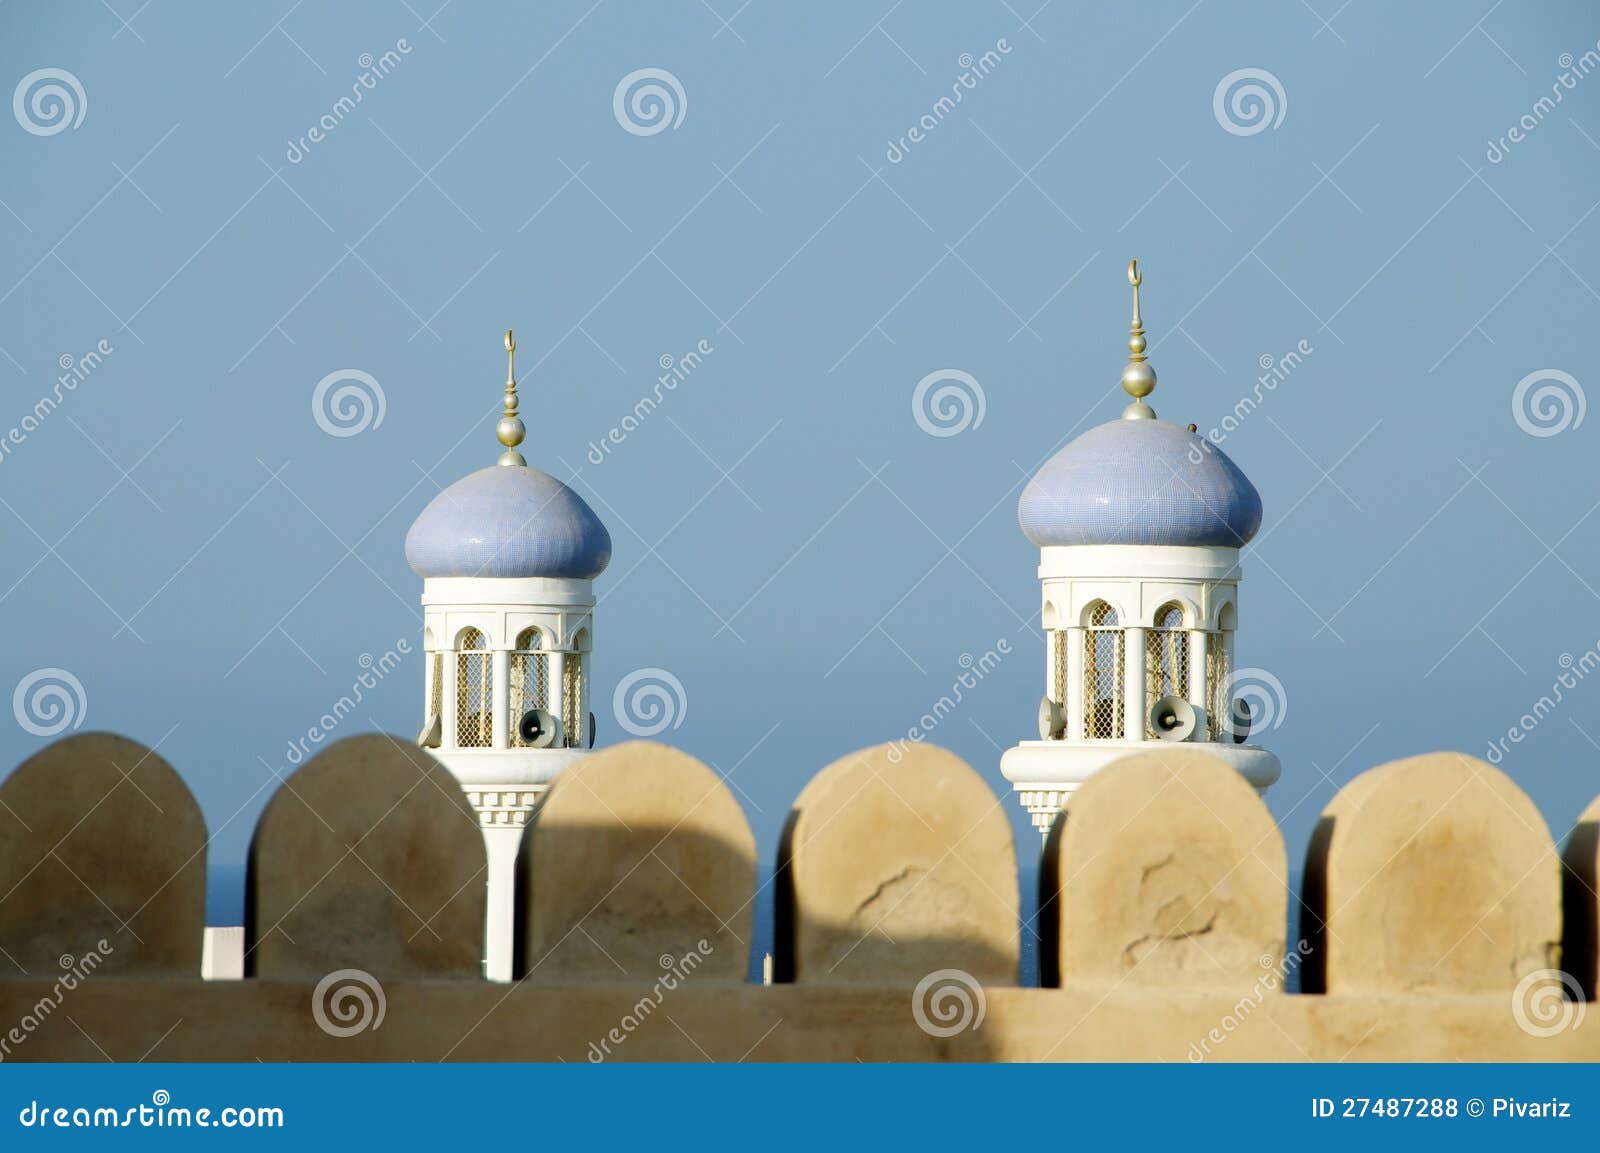 omani fort and minarets